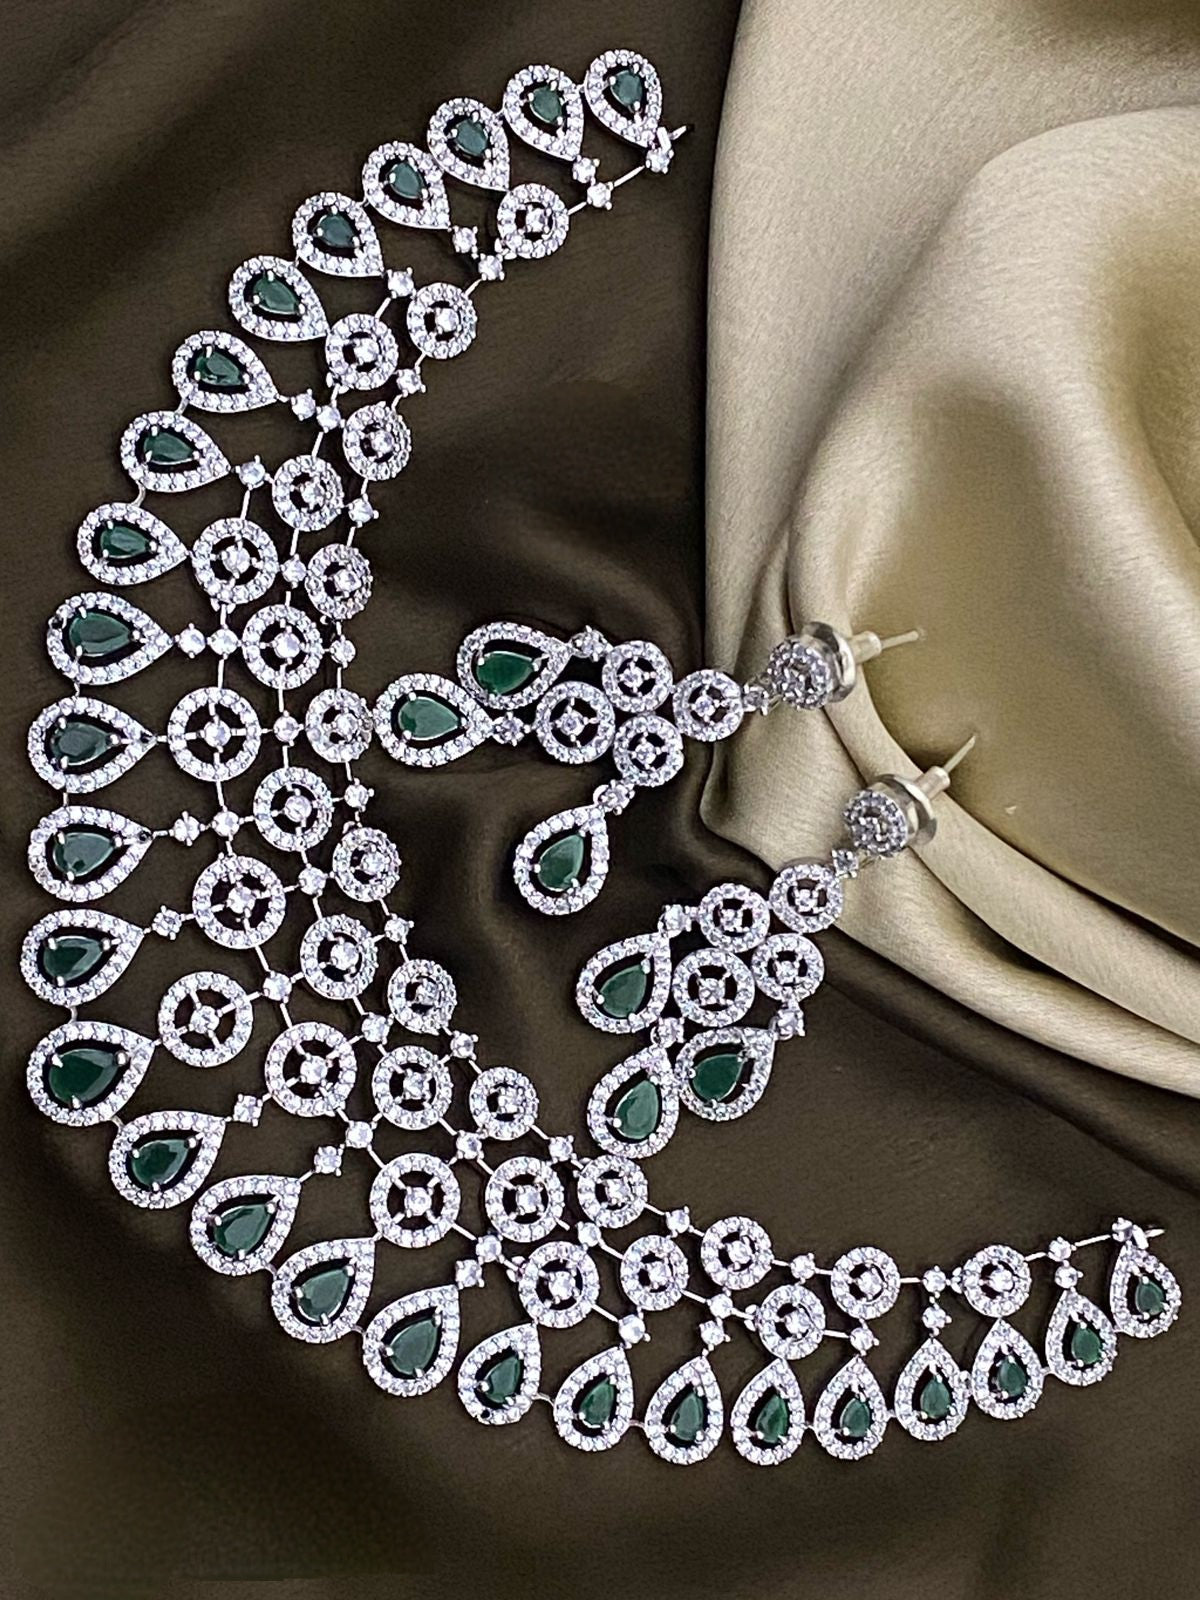 Exclusive Rhodium CZ American Diamond Wedding Choker Necklace, Tear Drop Pink Diamond AD Choker set, Indian Pakistani style Wedding jewelry